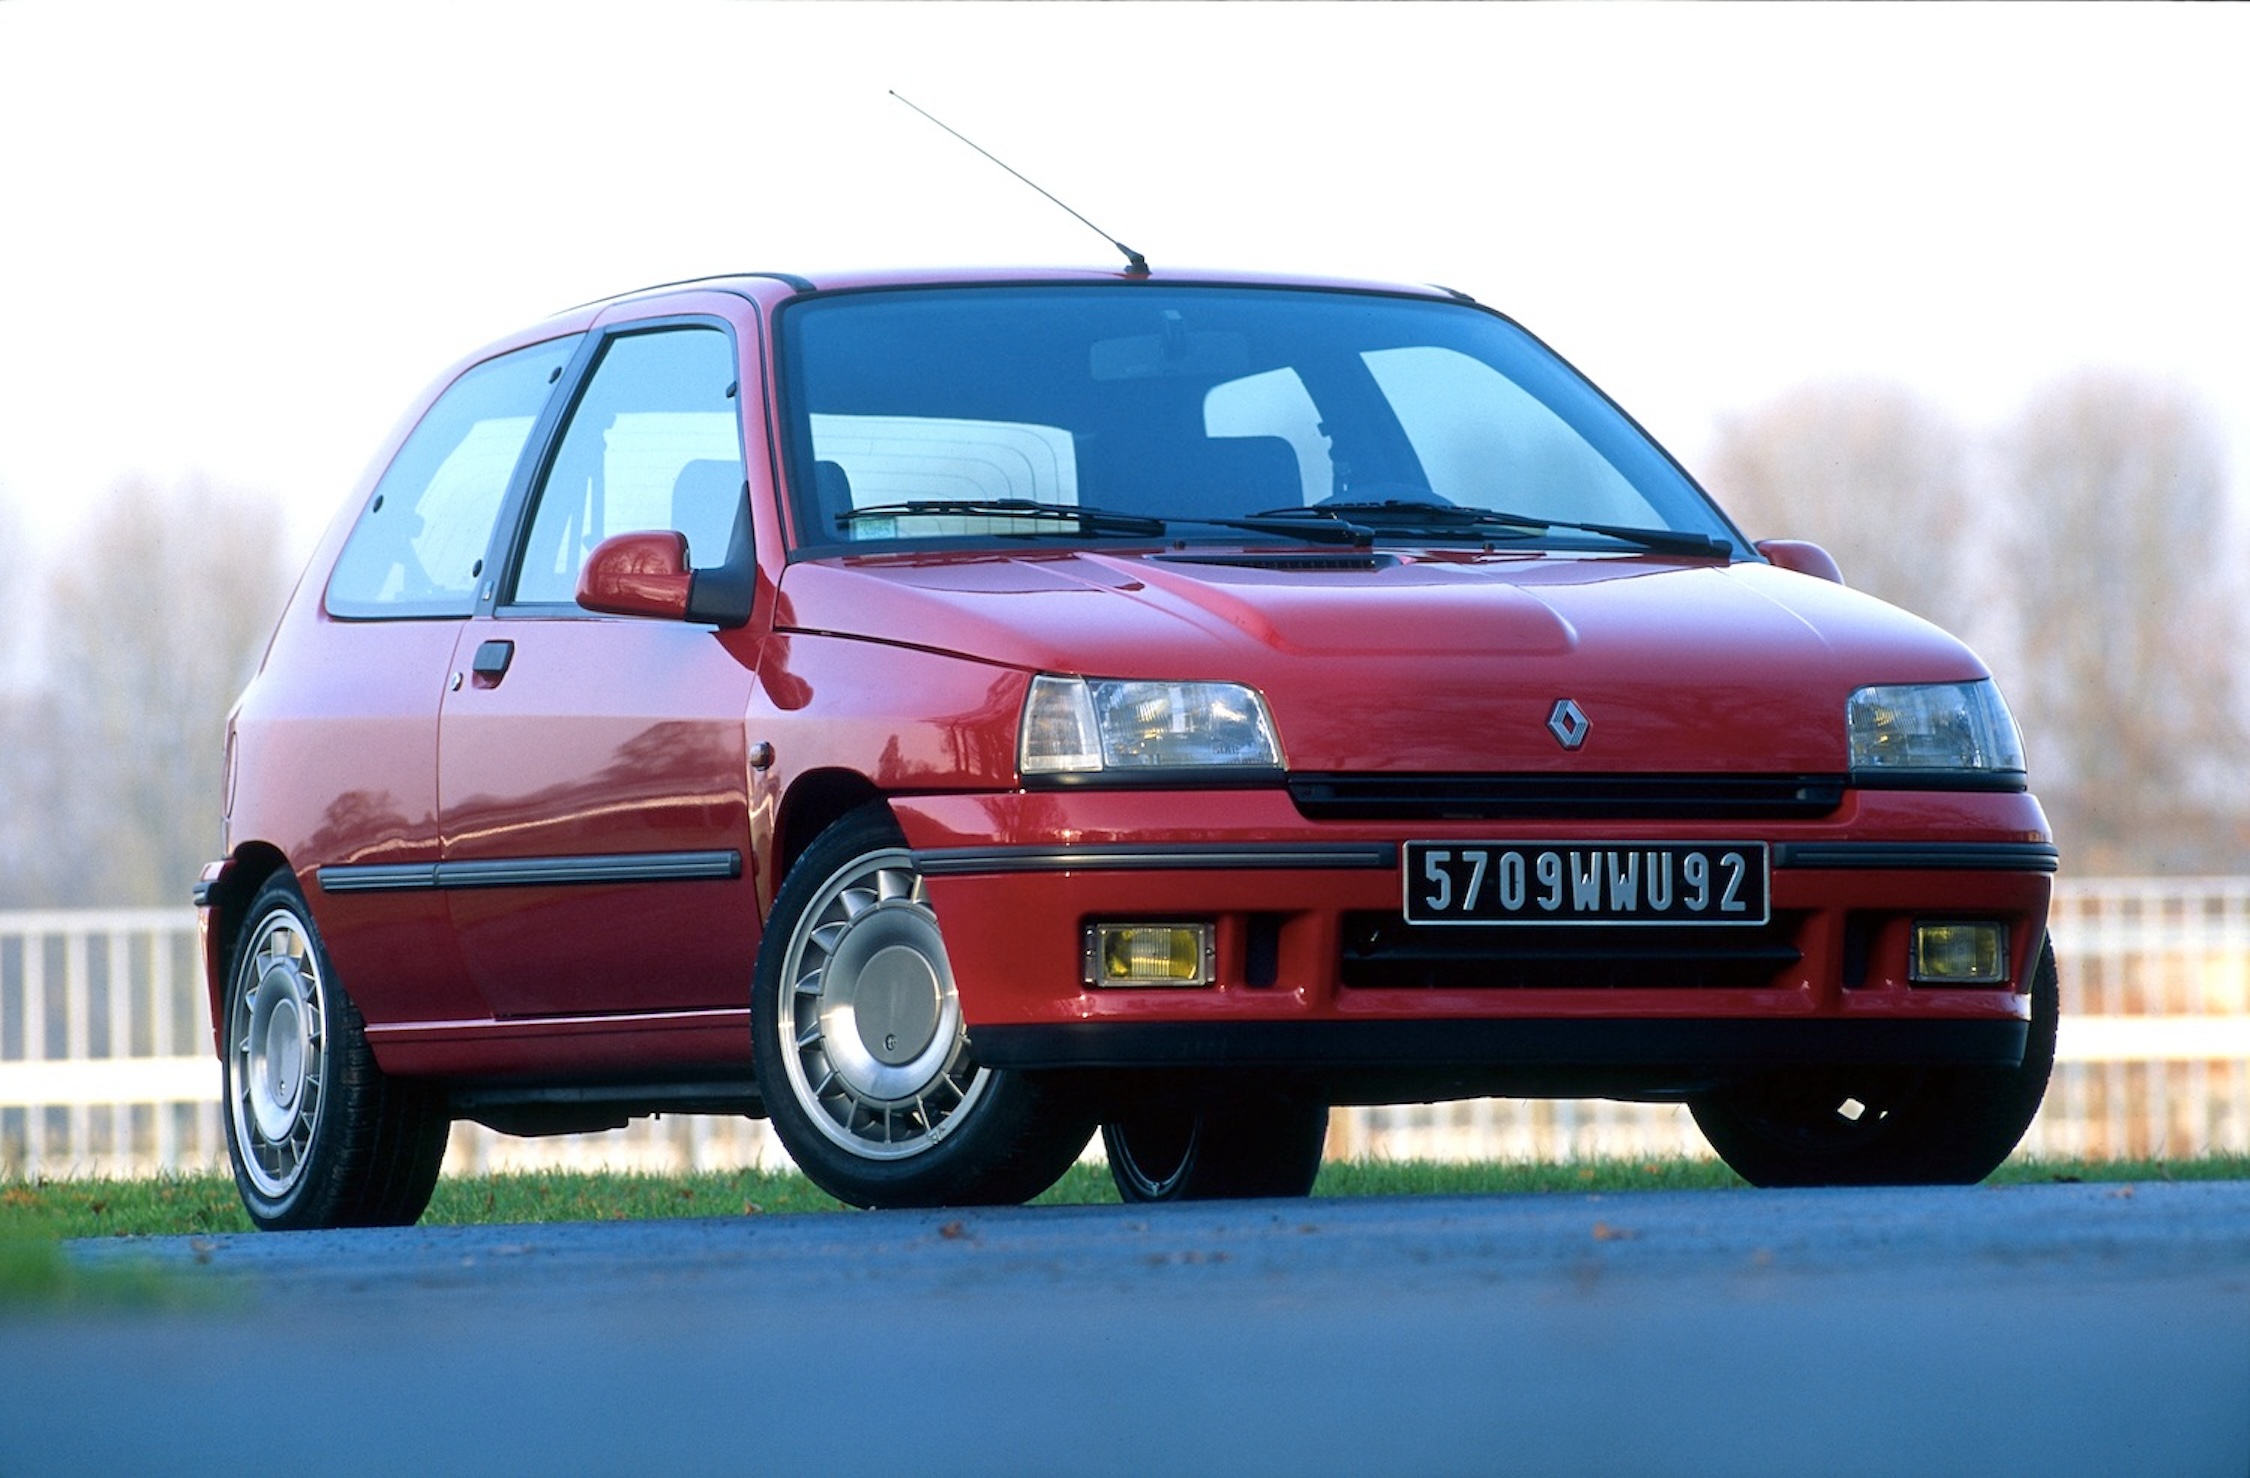 Renault Clio 16S : sportive et discrète (1991-1996)